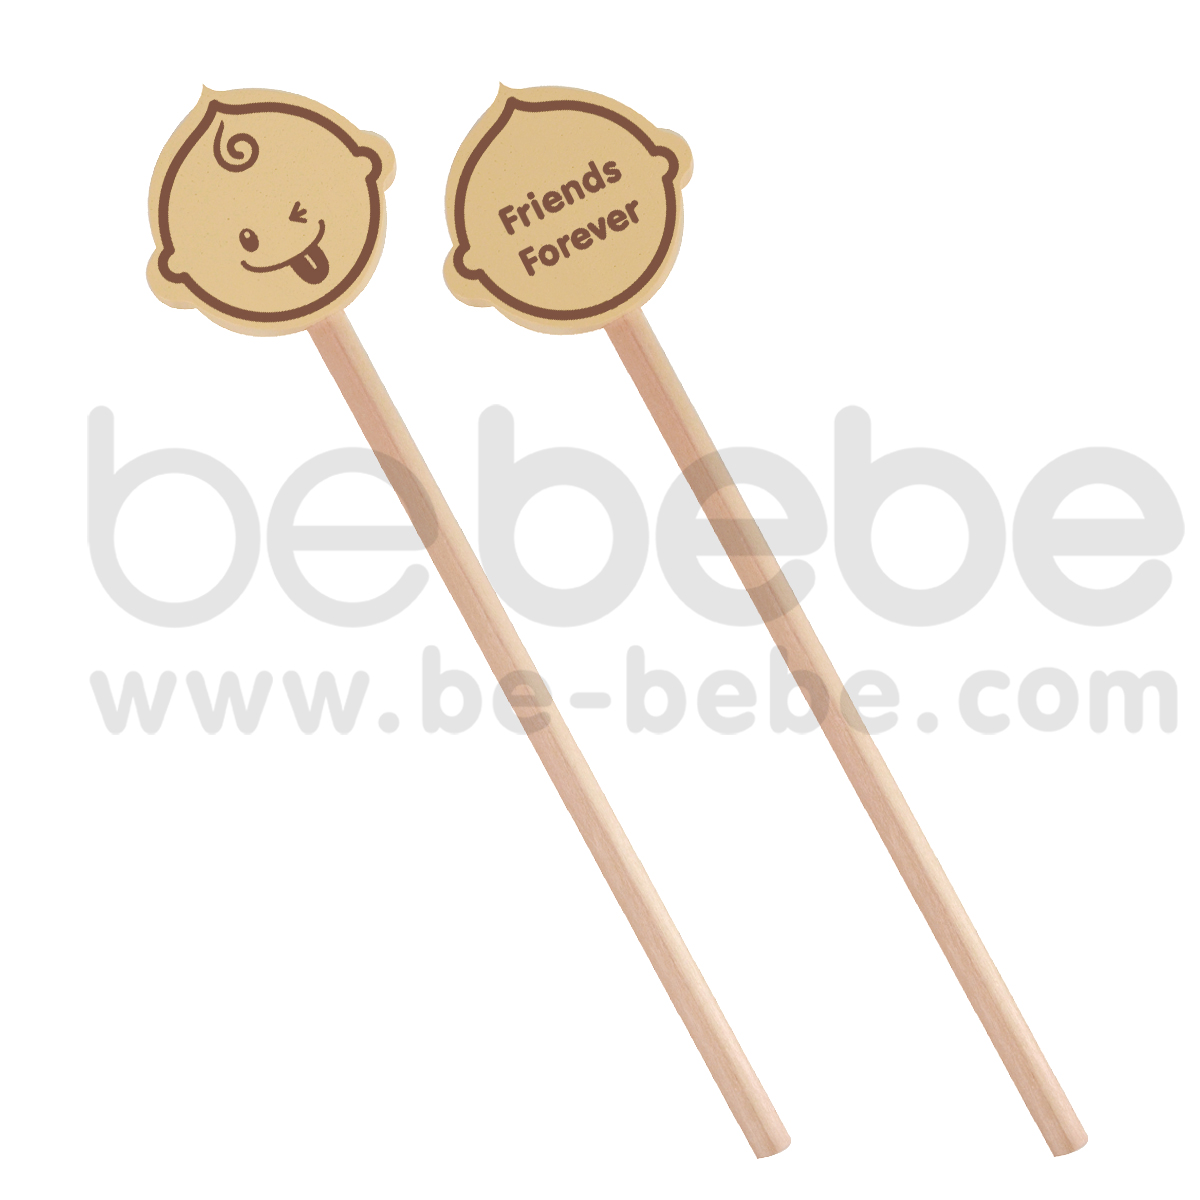 bebebe : ดินสอไข่ Friends Forever